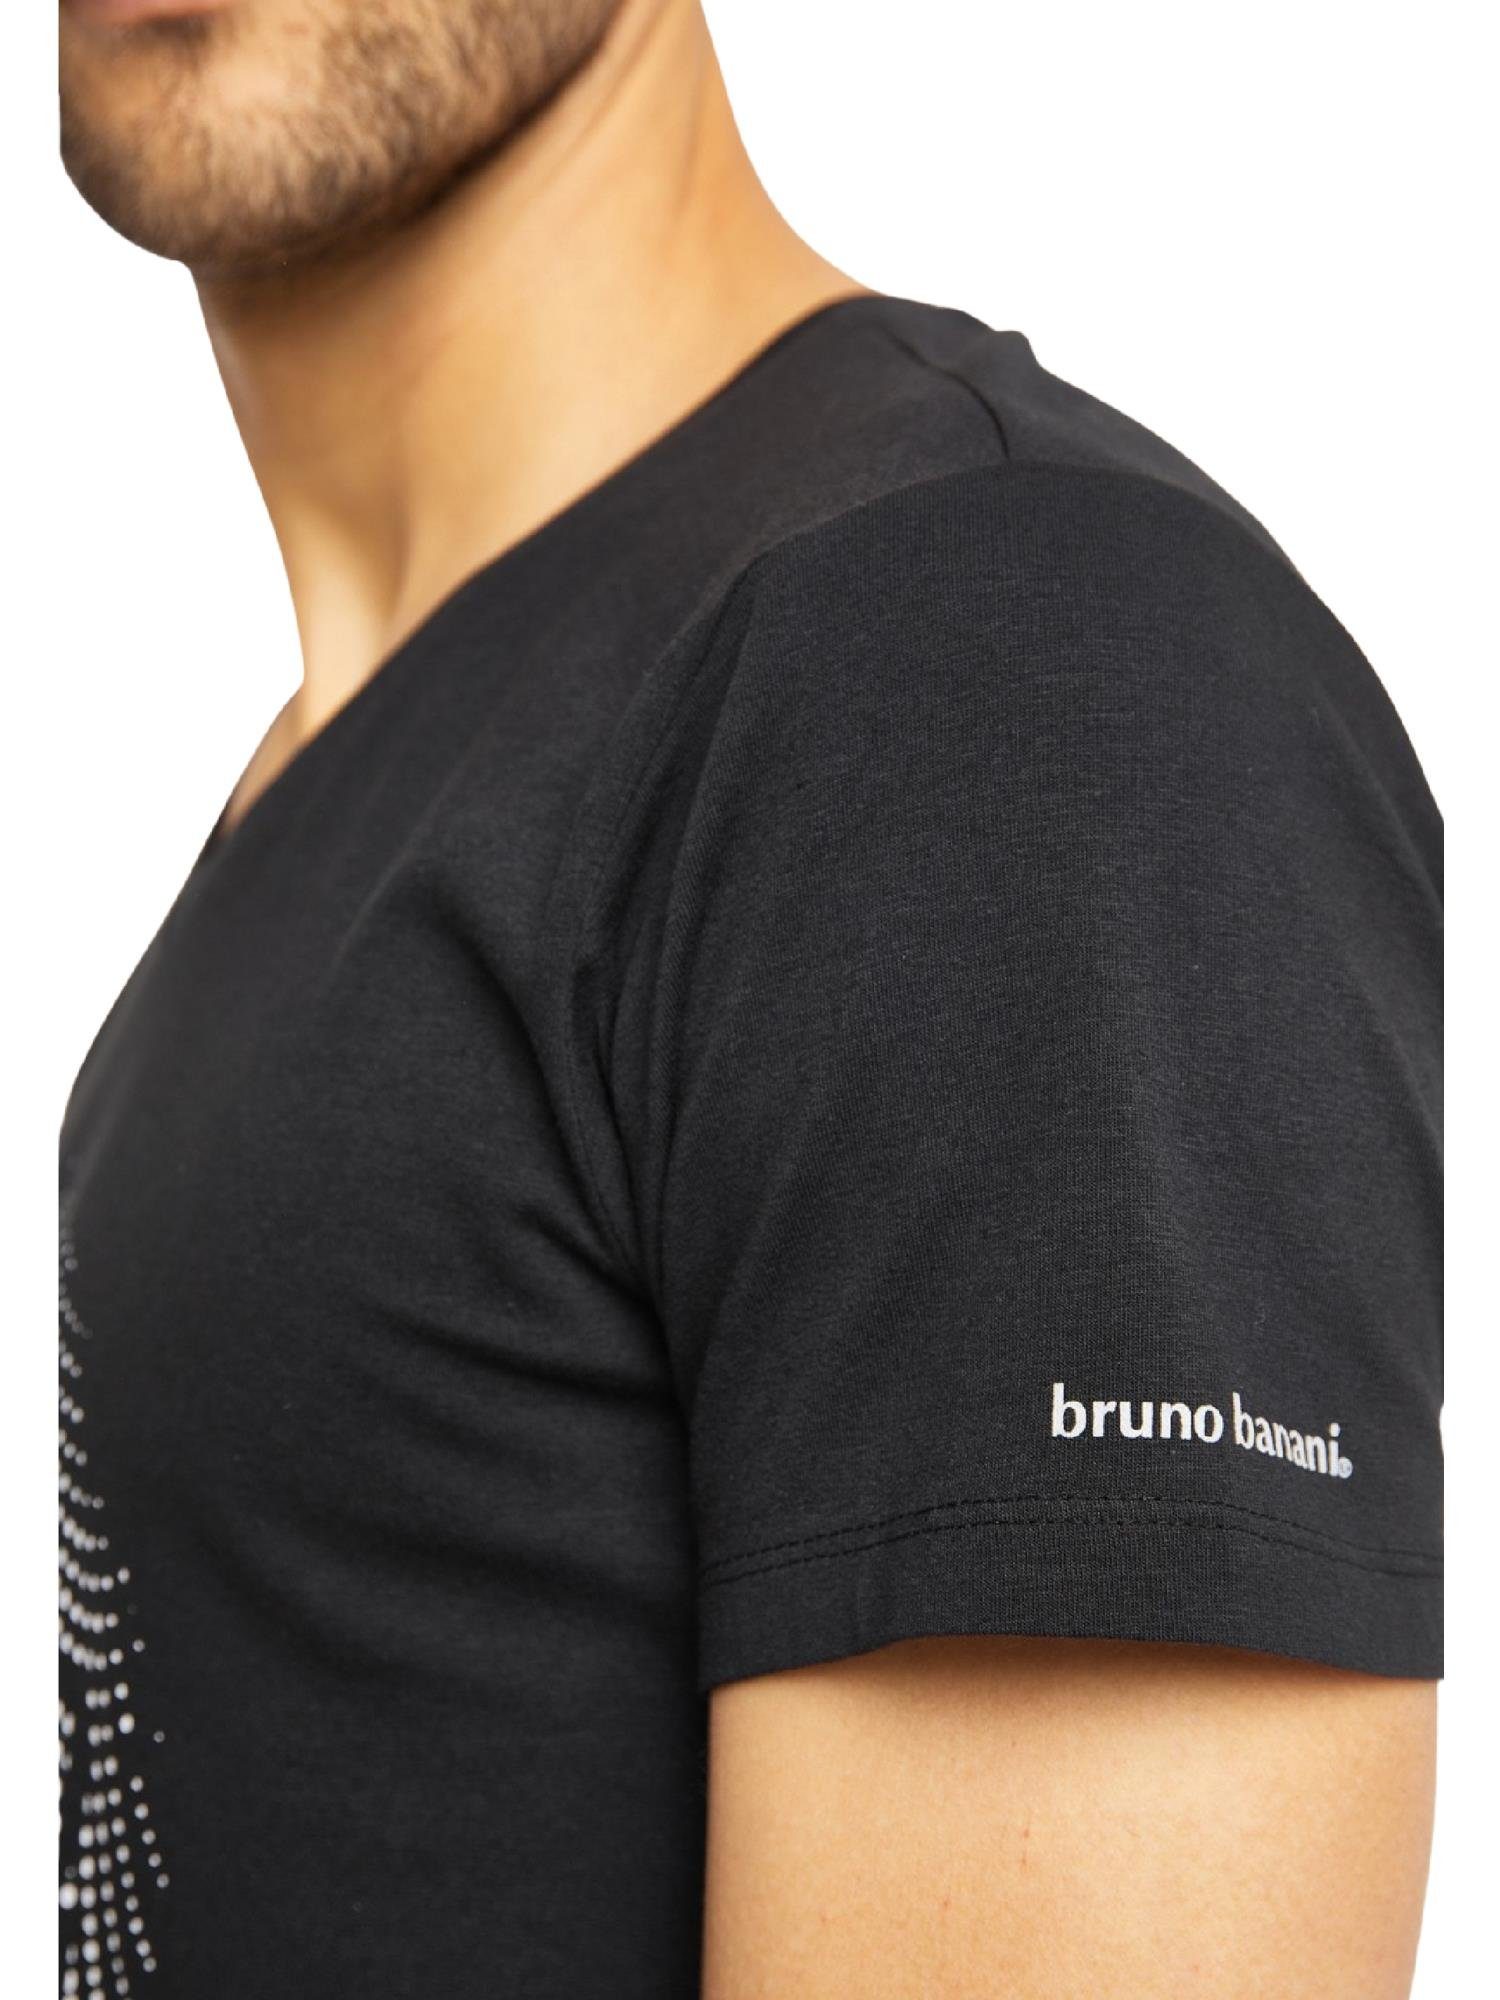 Bruno Banani FERGUSON T-Shirt